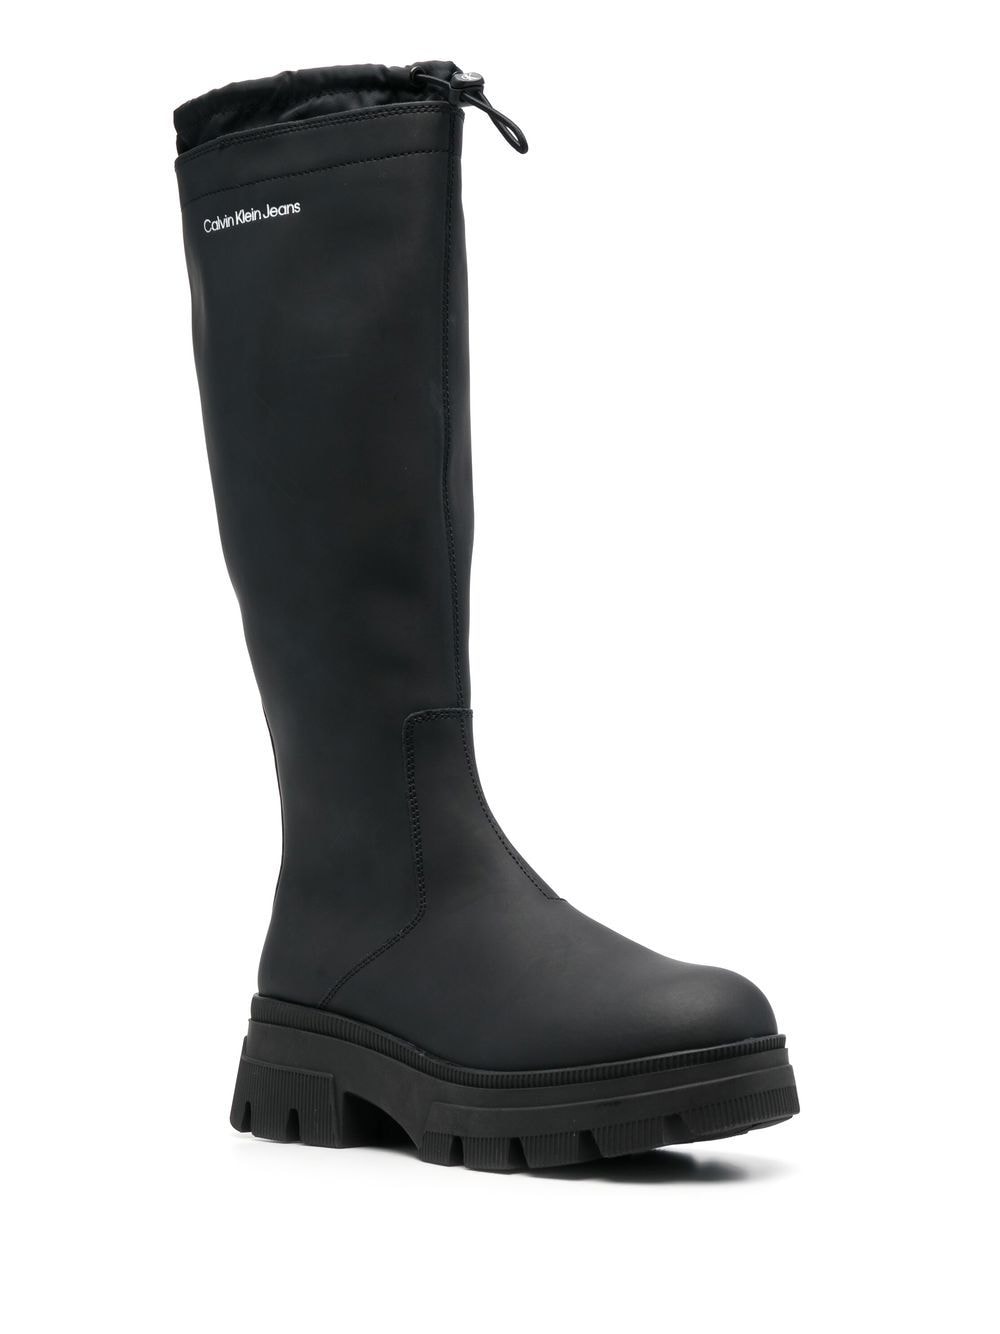 Image 2 of Calvin Klein drawstring knee-high rain boots